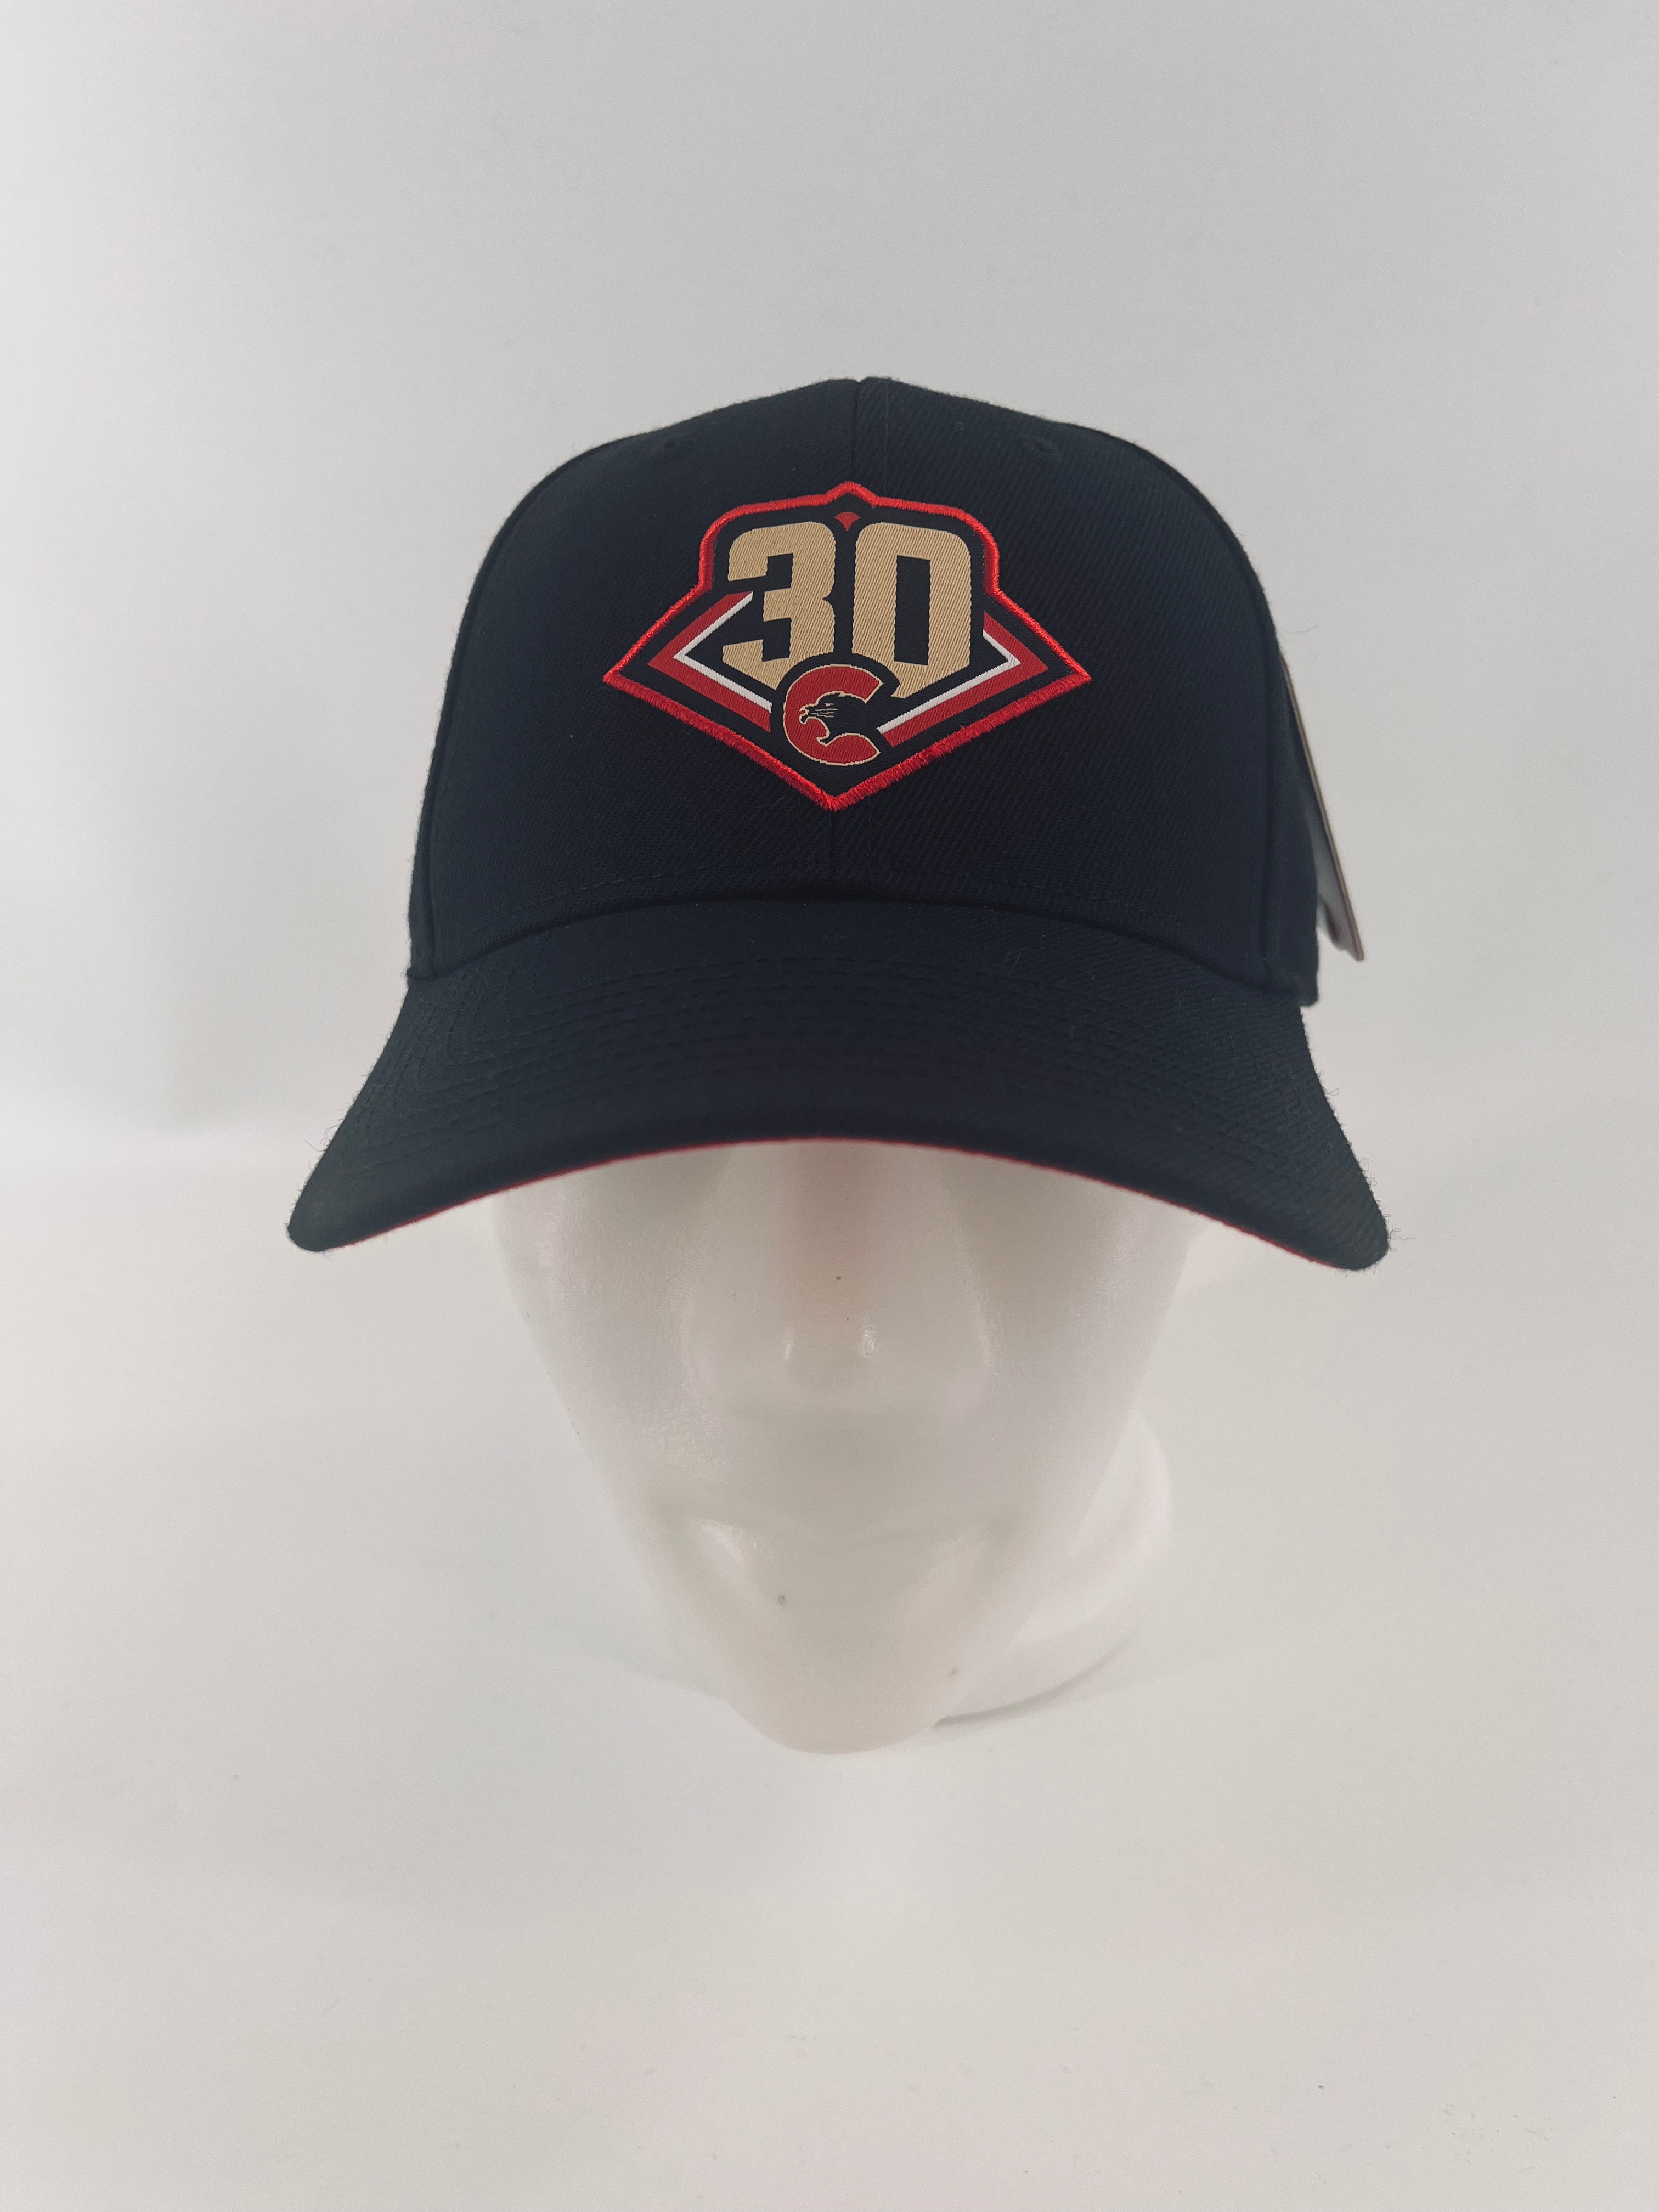 30th Anniversary Hat